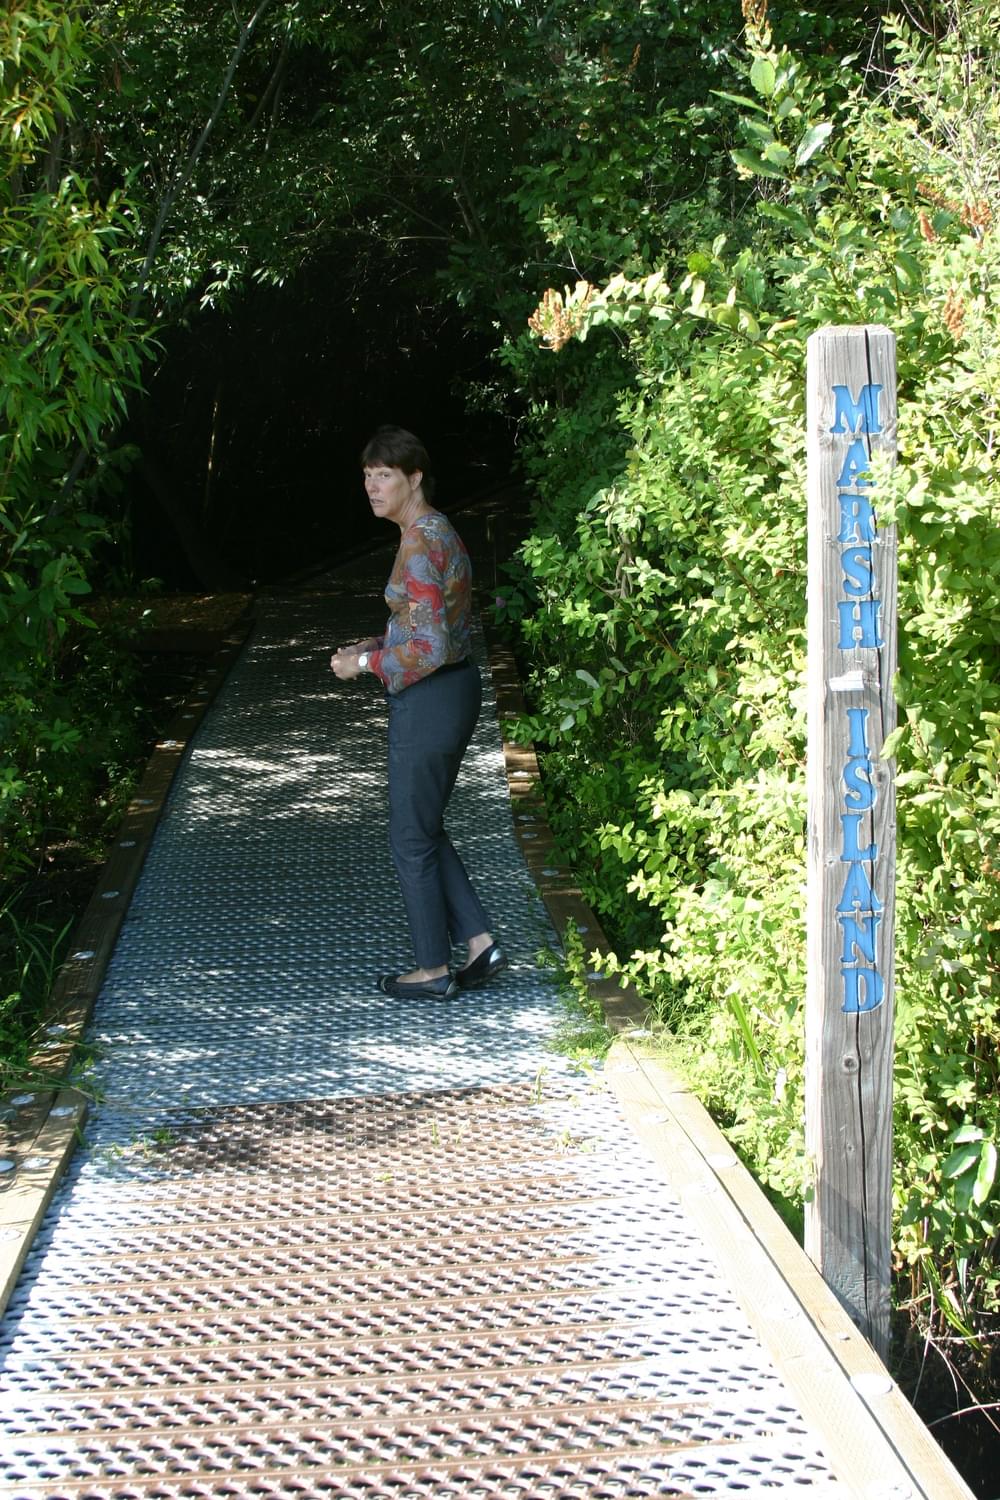 Non-skid metal surface on boardwalk keeps trail dry along water's edge; Marsh Island, Arboretum Waterfront Trail in Seattle, Washington